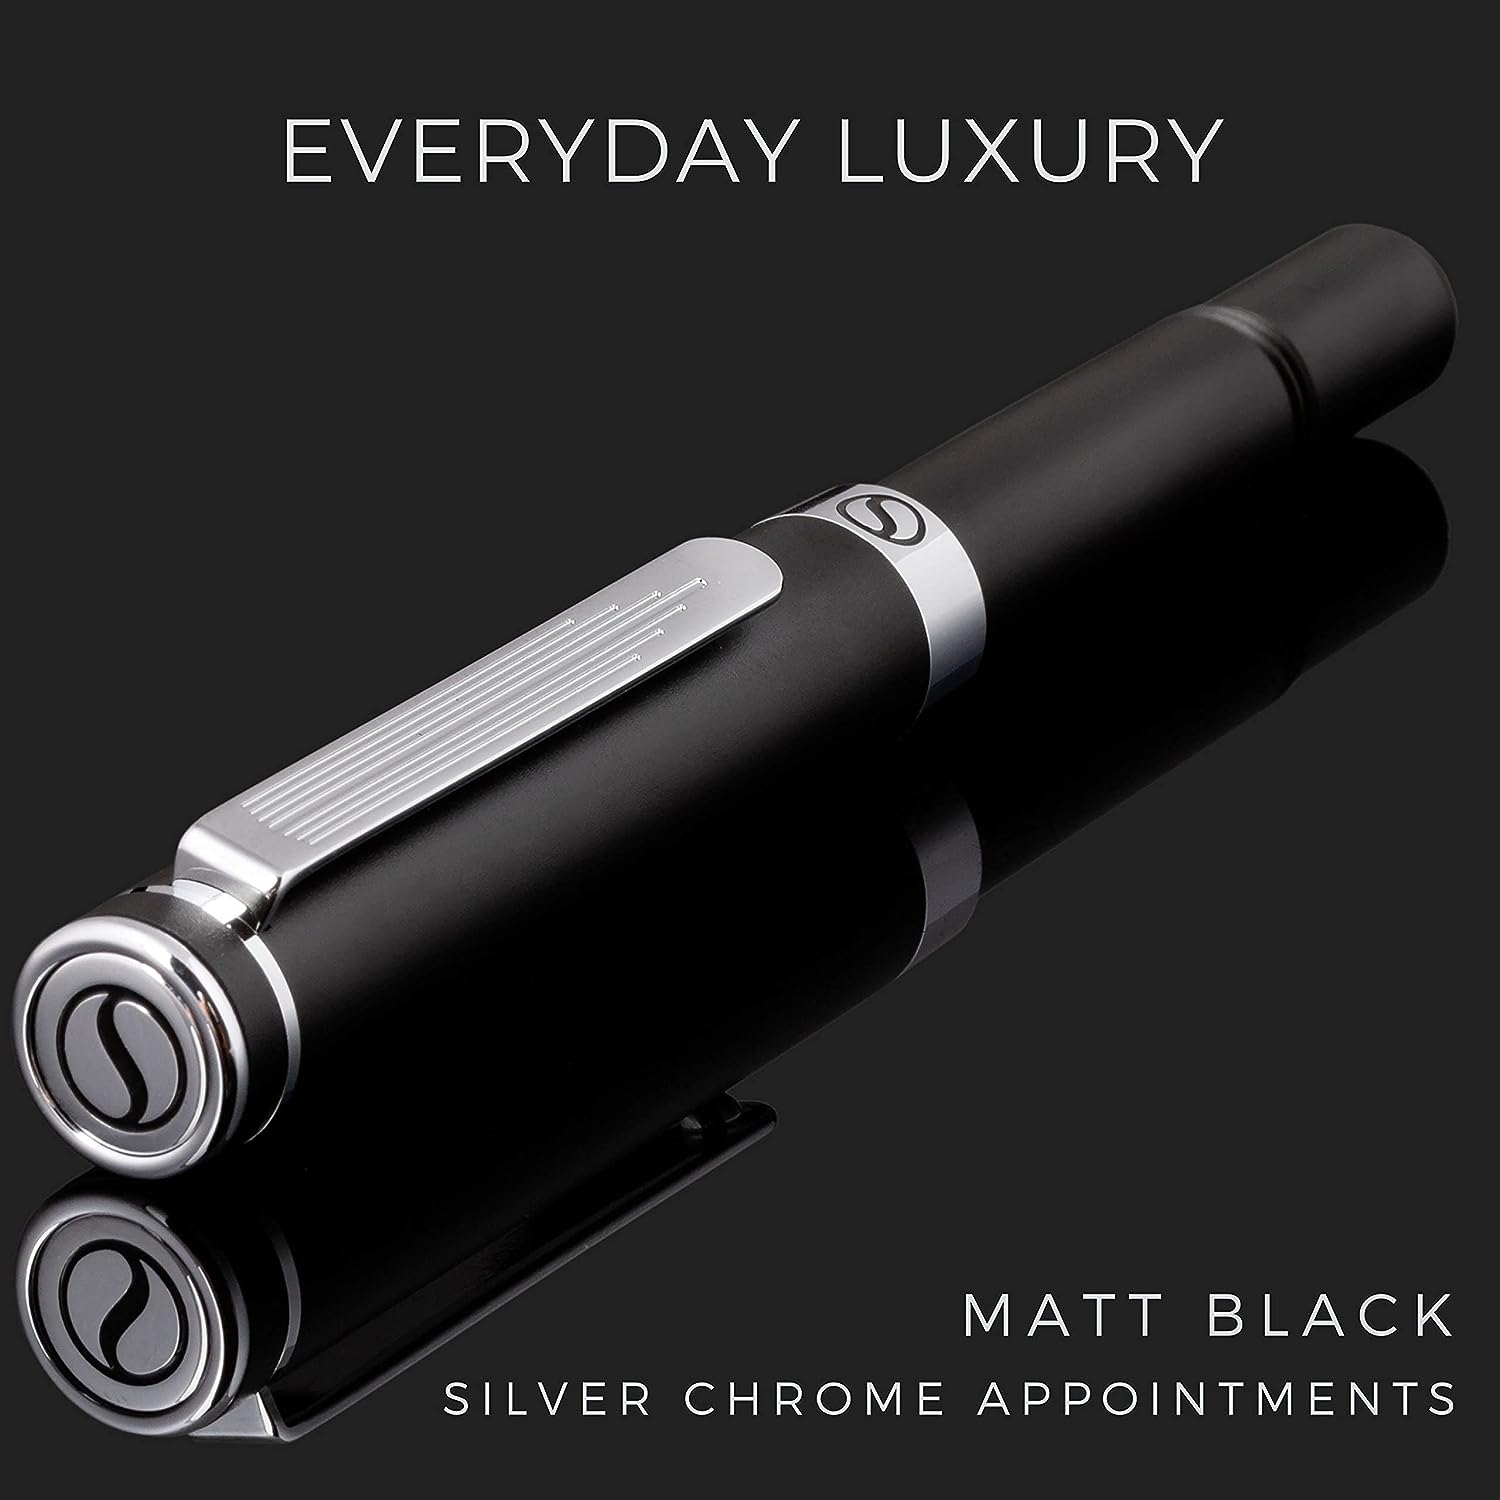 Scriveiner Luxury EDC Fountain Pen (Fine), Stunning Matt Black Pocket Pen, Chrome Finish